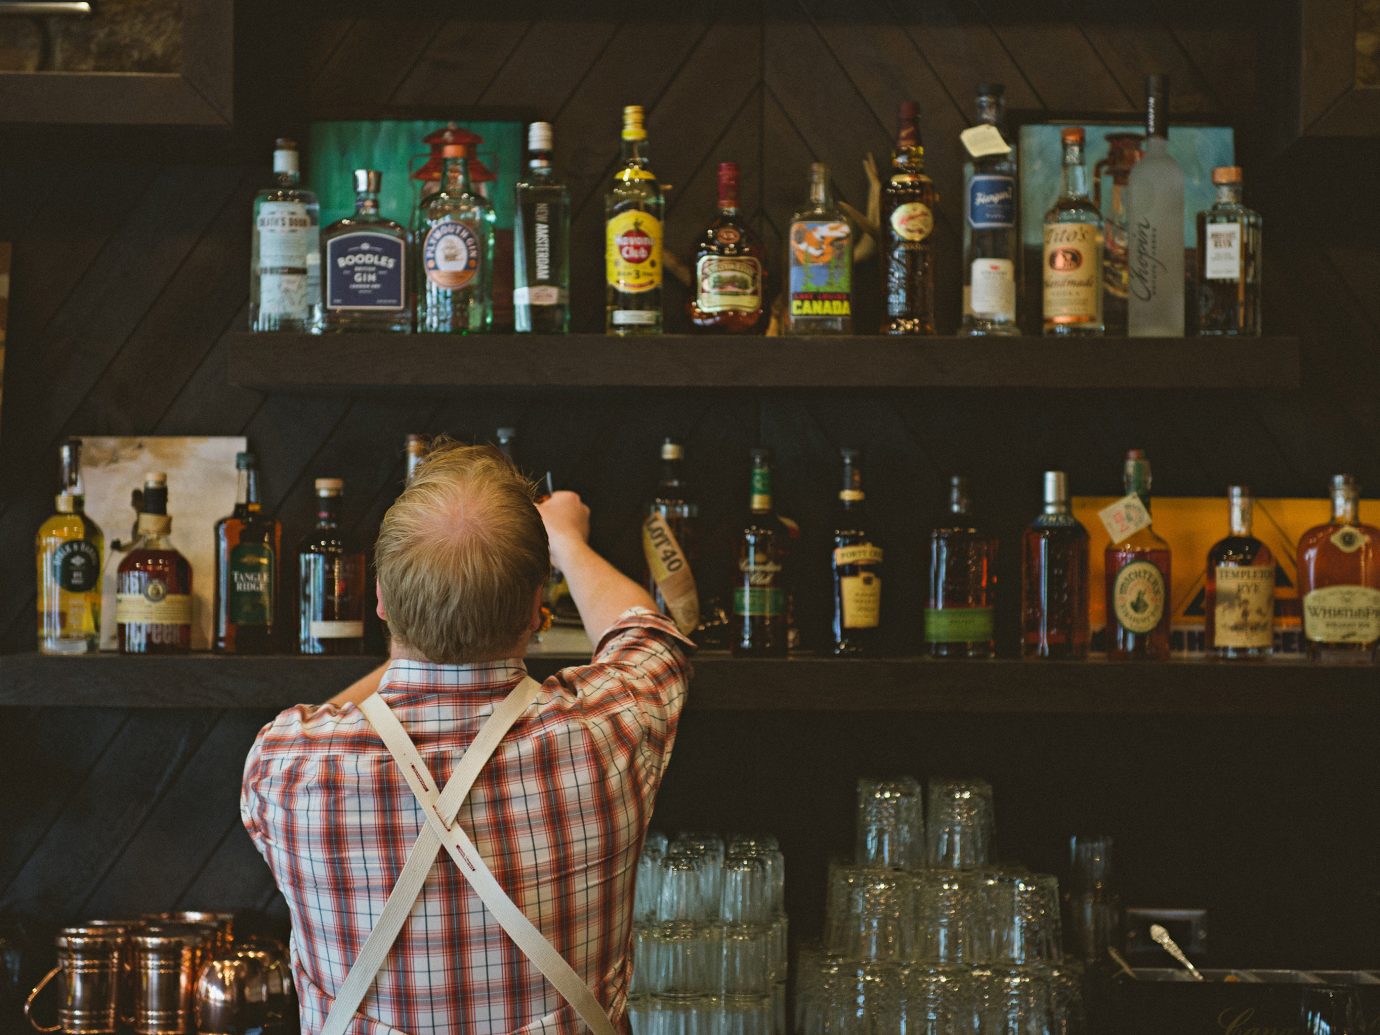 Alberta Canada Road Trips bottle person indoor Bar Drink alcohol sense distilled beverage drinking